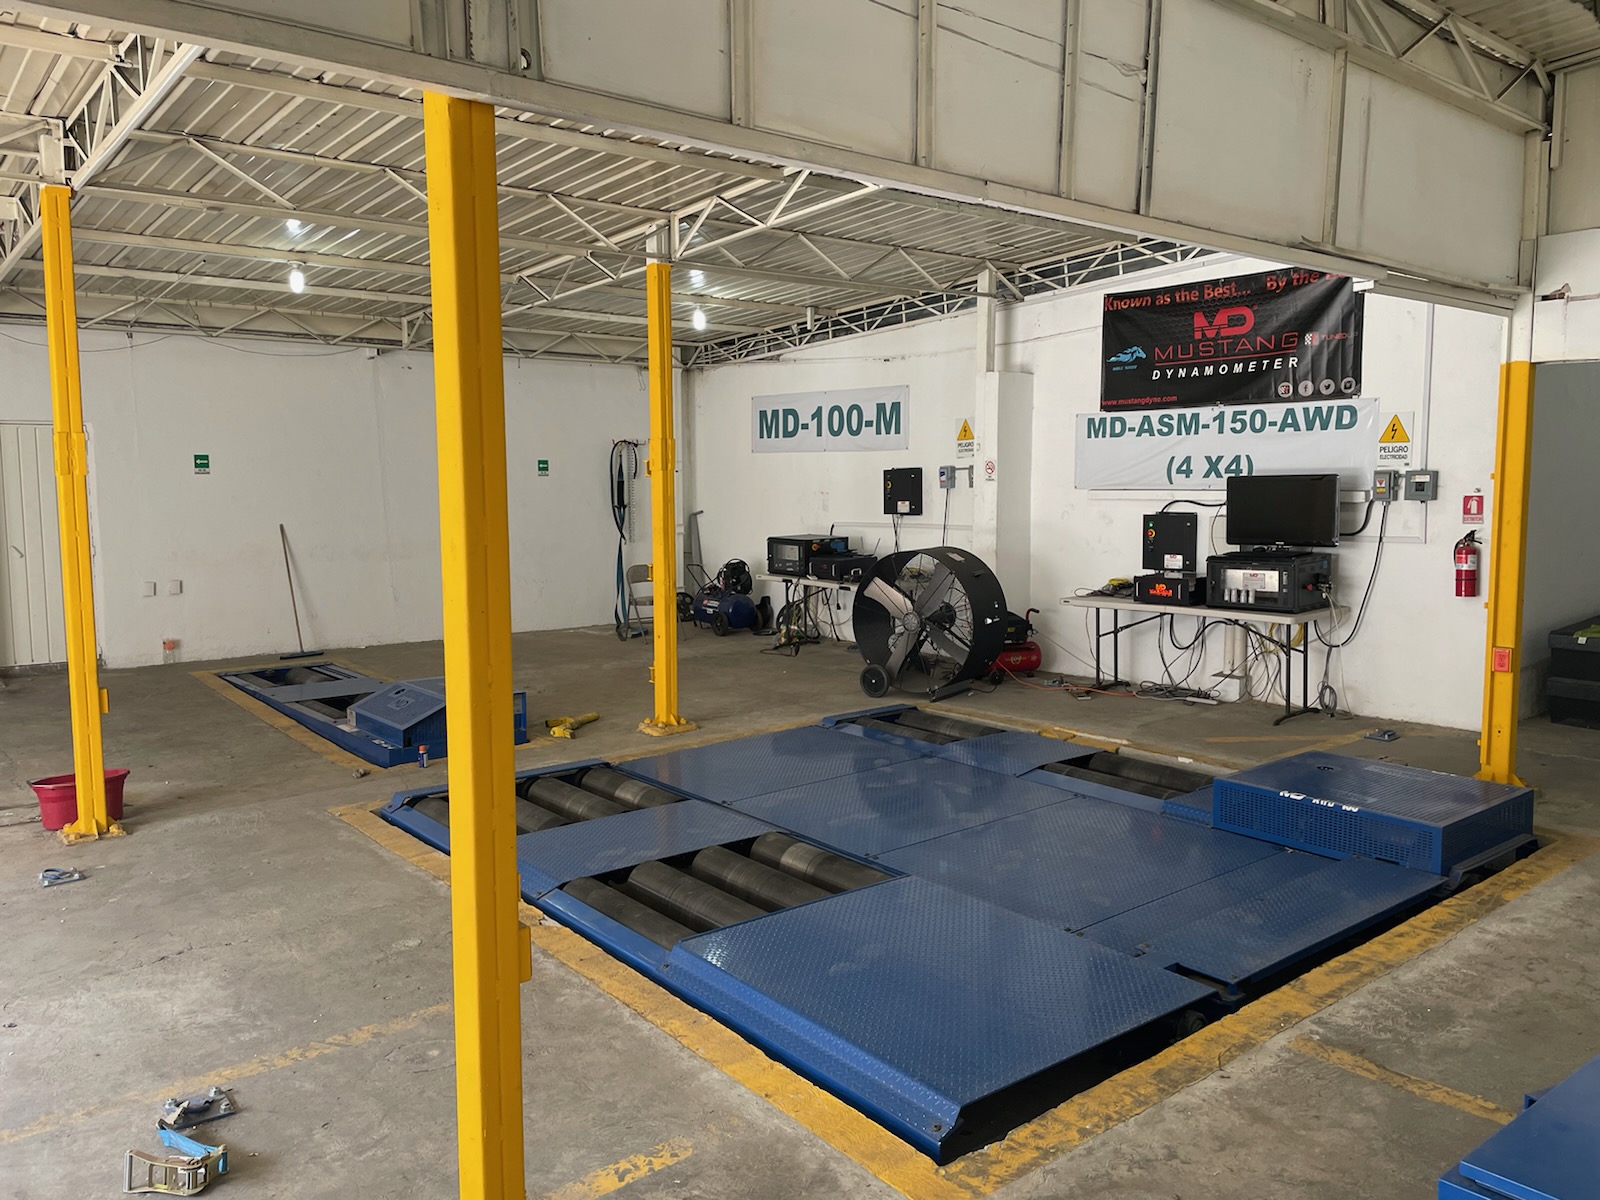 Mustang Dynamometer Exhibiting at Ina PAACE Automechanika Mexico 2022 Booth 3523